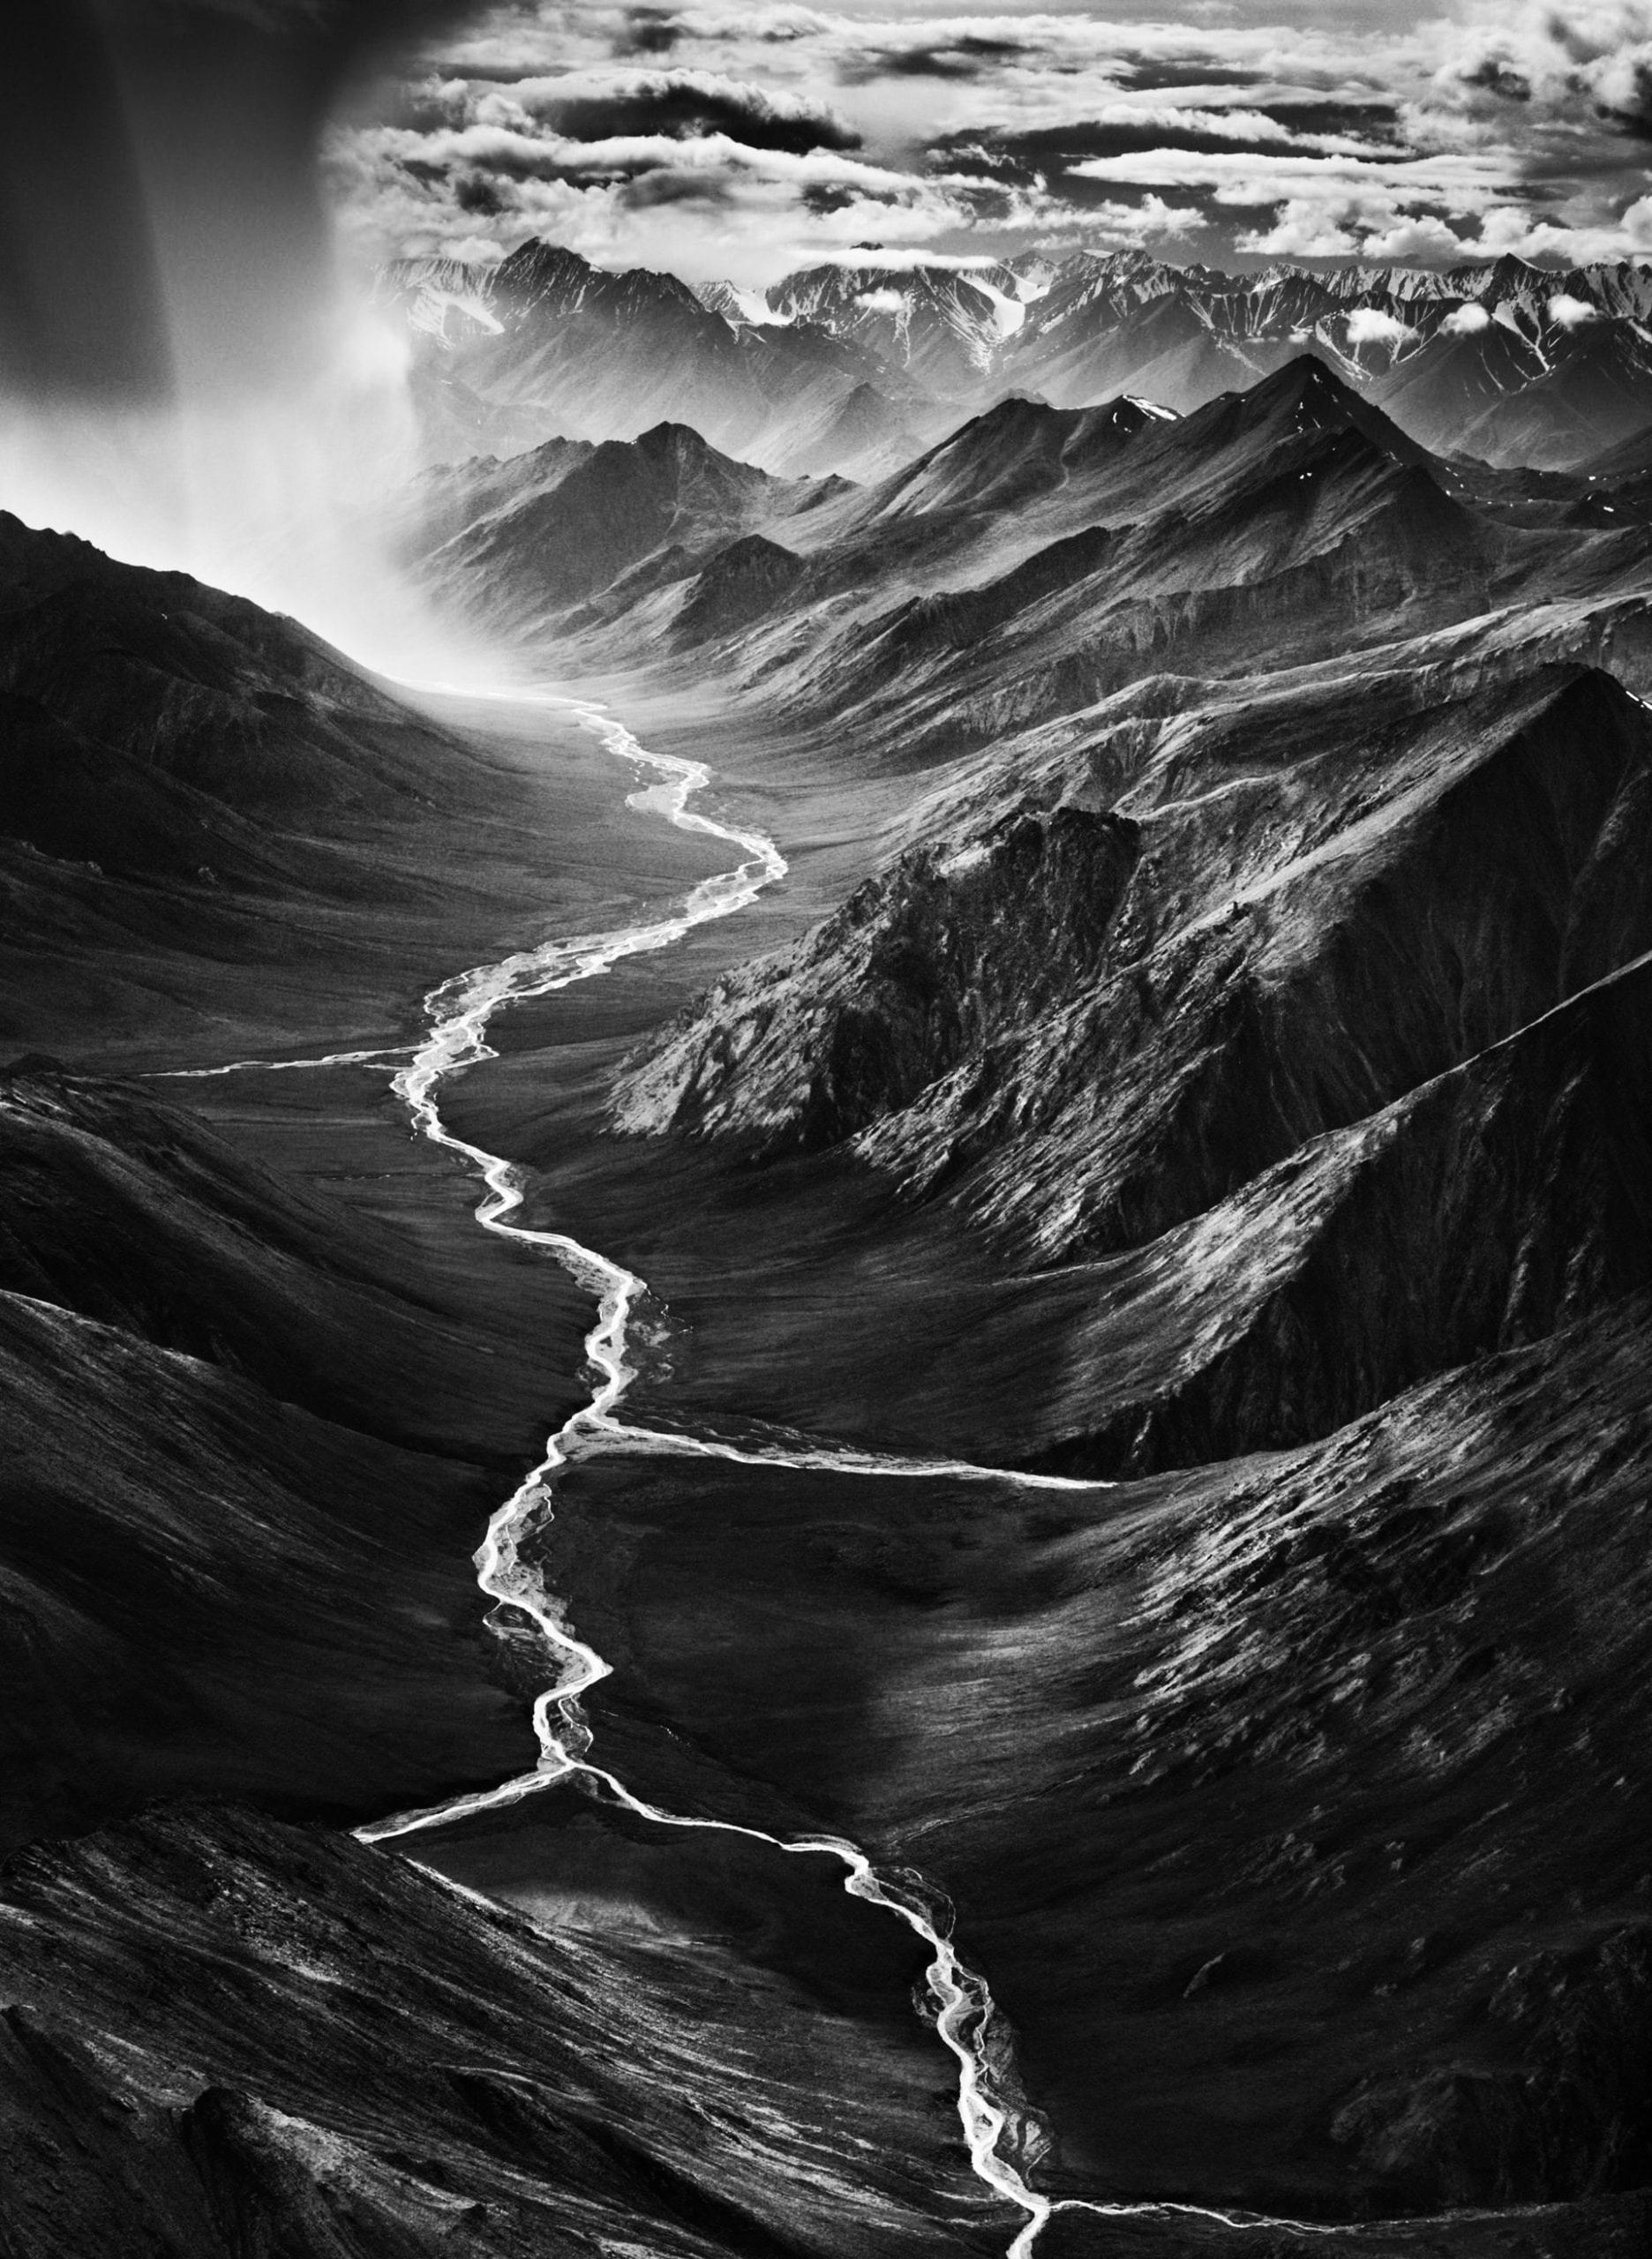 Sebastião Salgado Black and White Photograph - Eastern Part of the Brooks Range, Alaska, USA